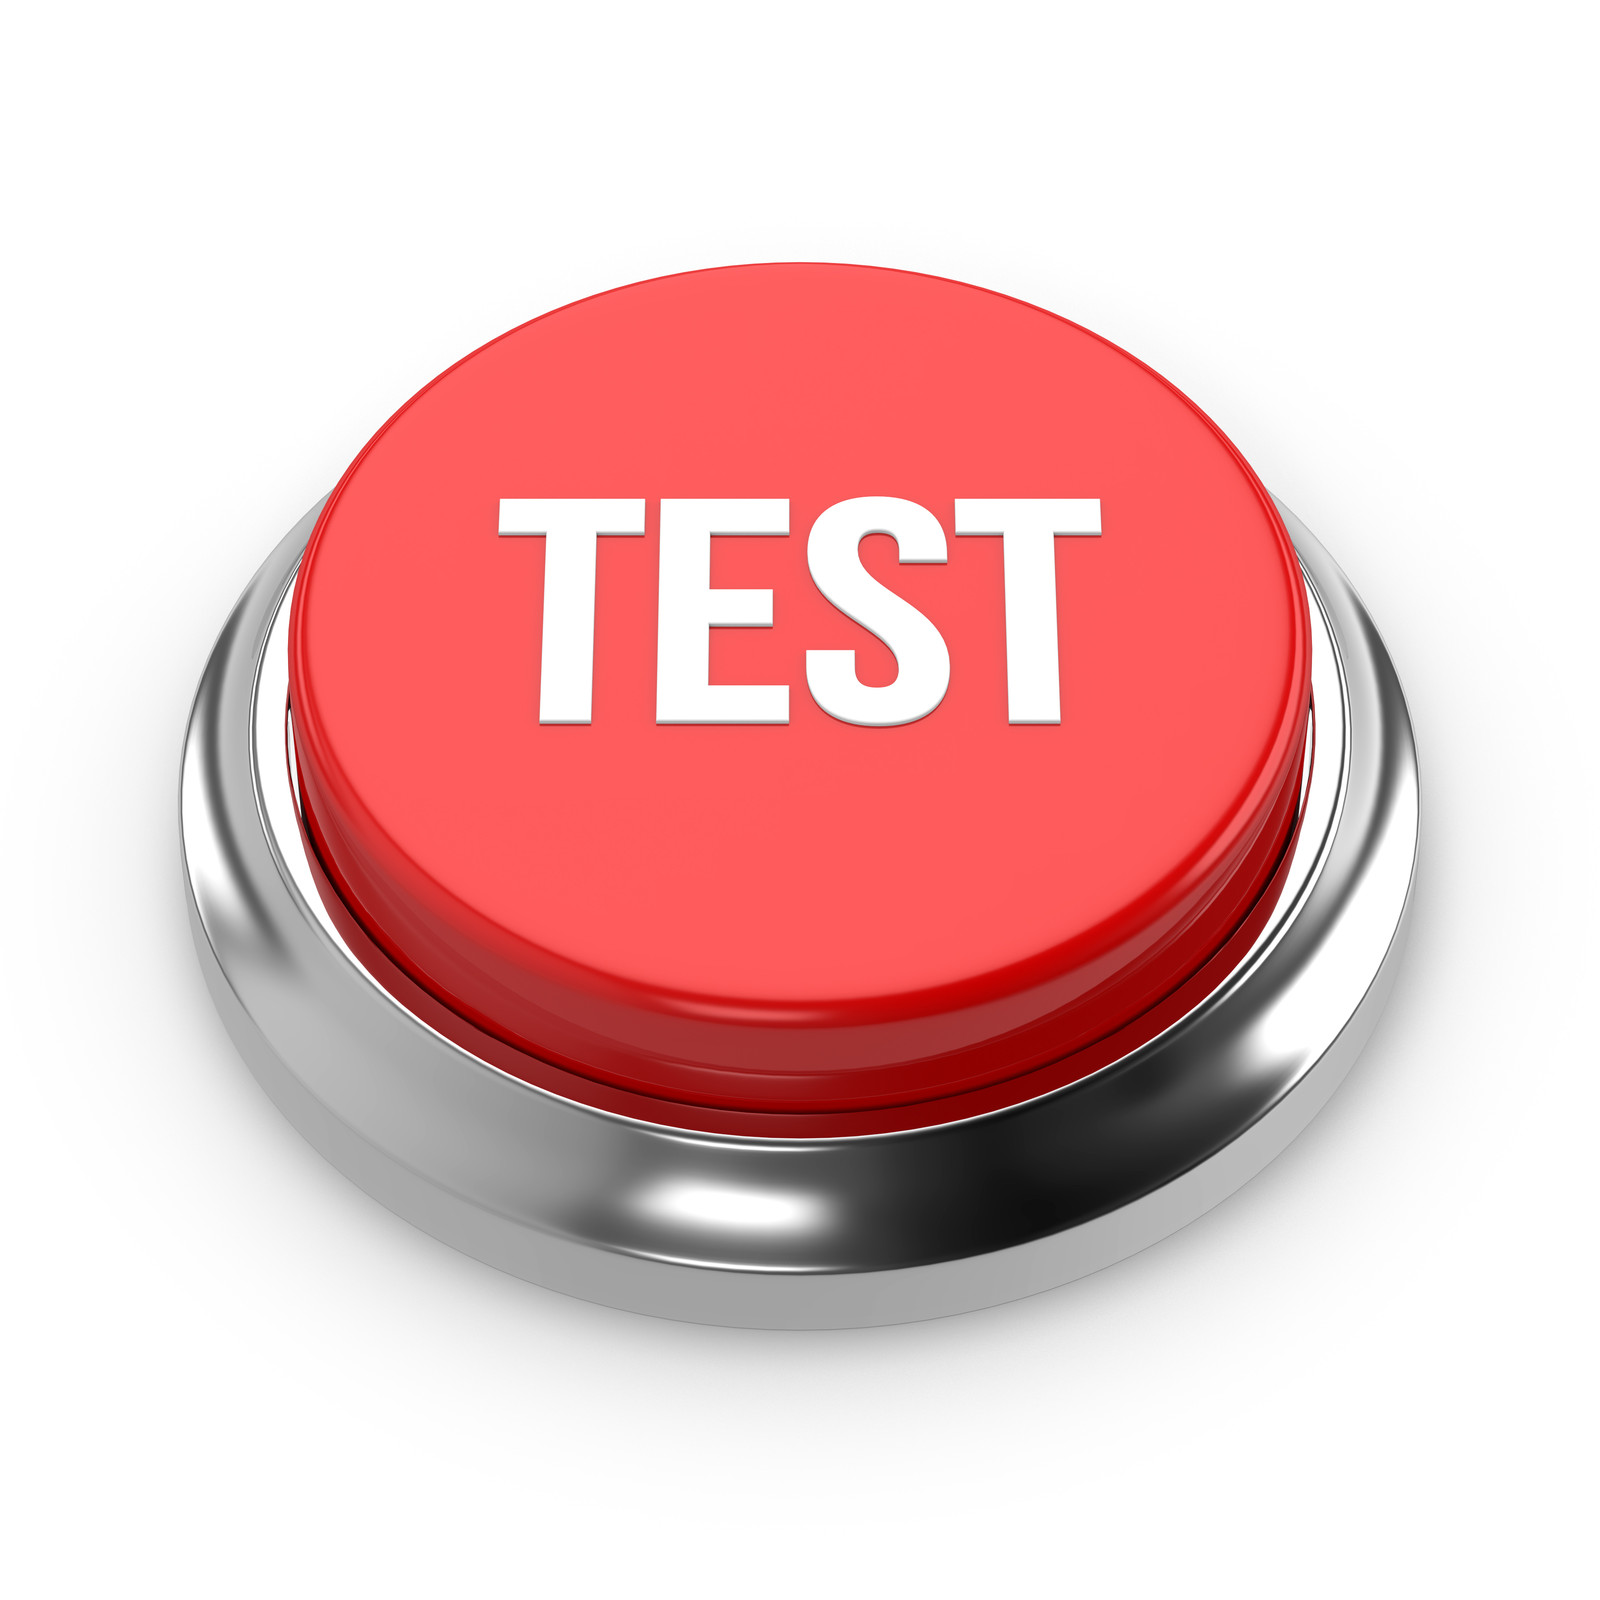 Тестовый. Кнопка тест. Test надпись. Красная кнопка тест. Красная кнопка для тестирования.